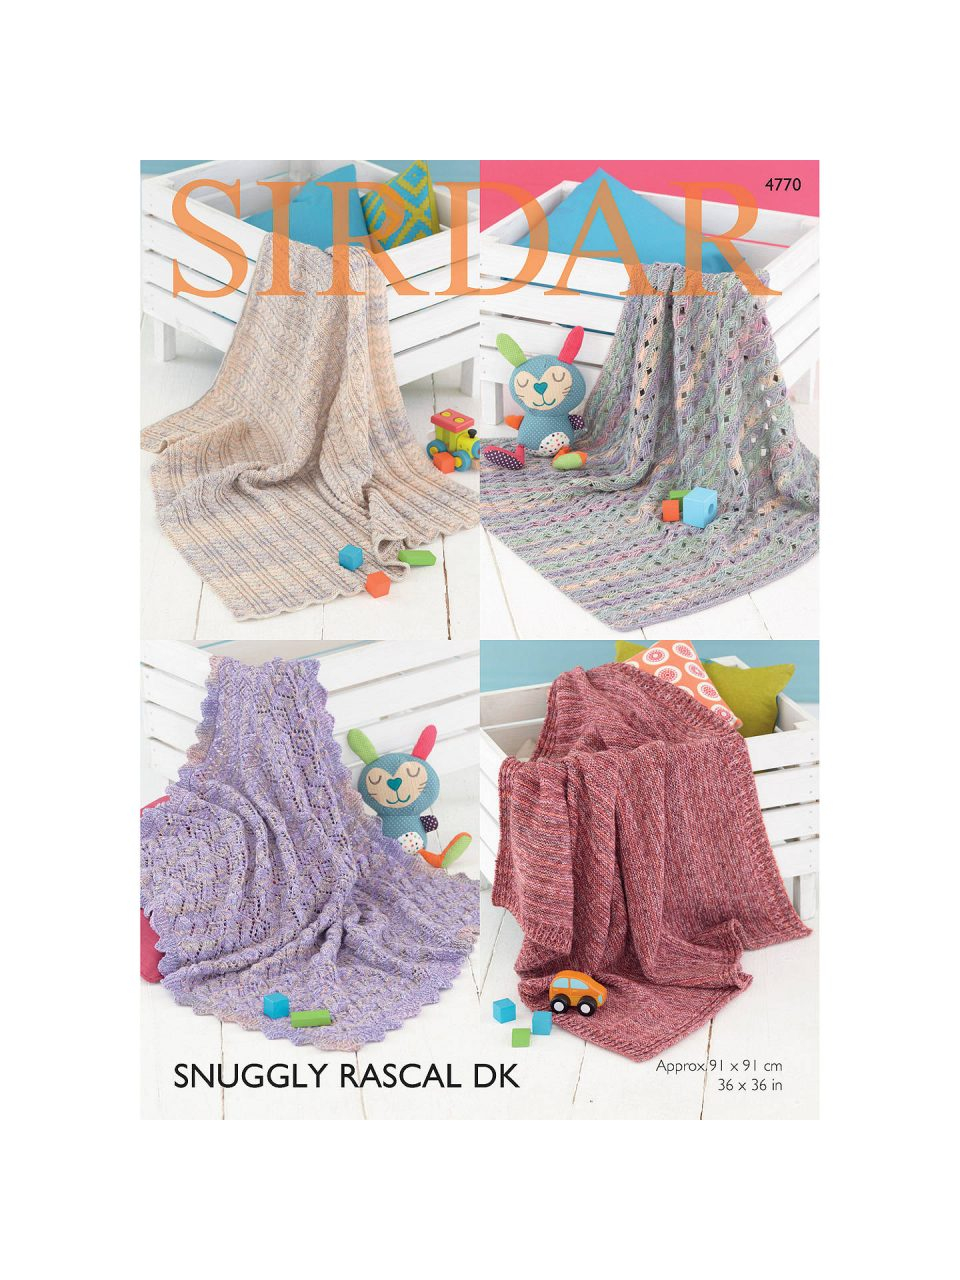 Sirdar Snuggly Knitting Patterns Sirdar Snuggly Rascal Ba Blanket Knitting Pattern John Patterns